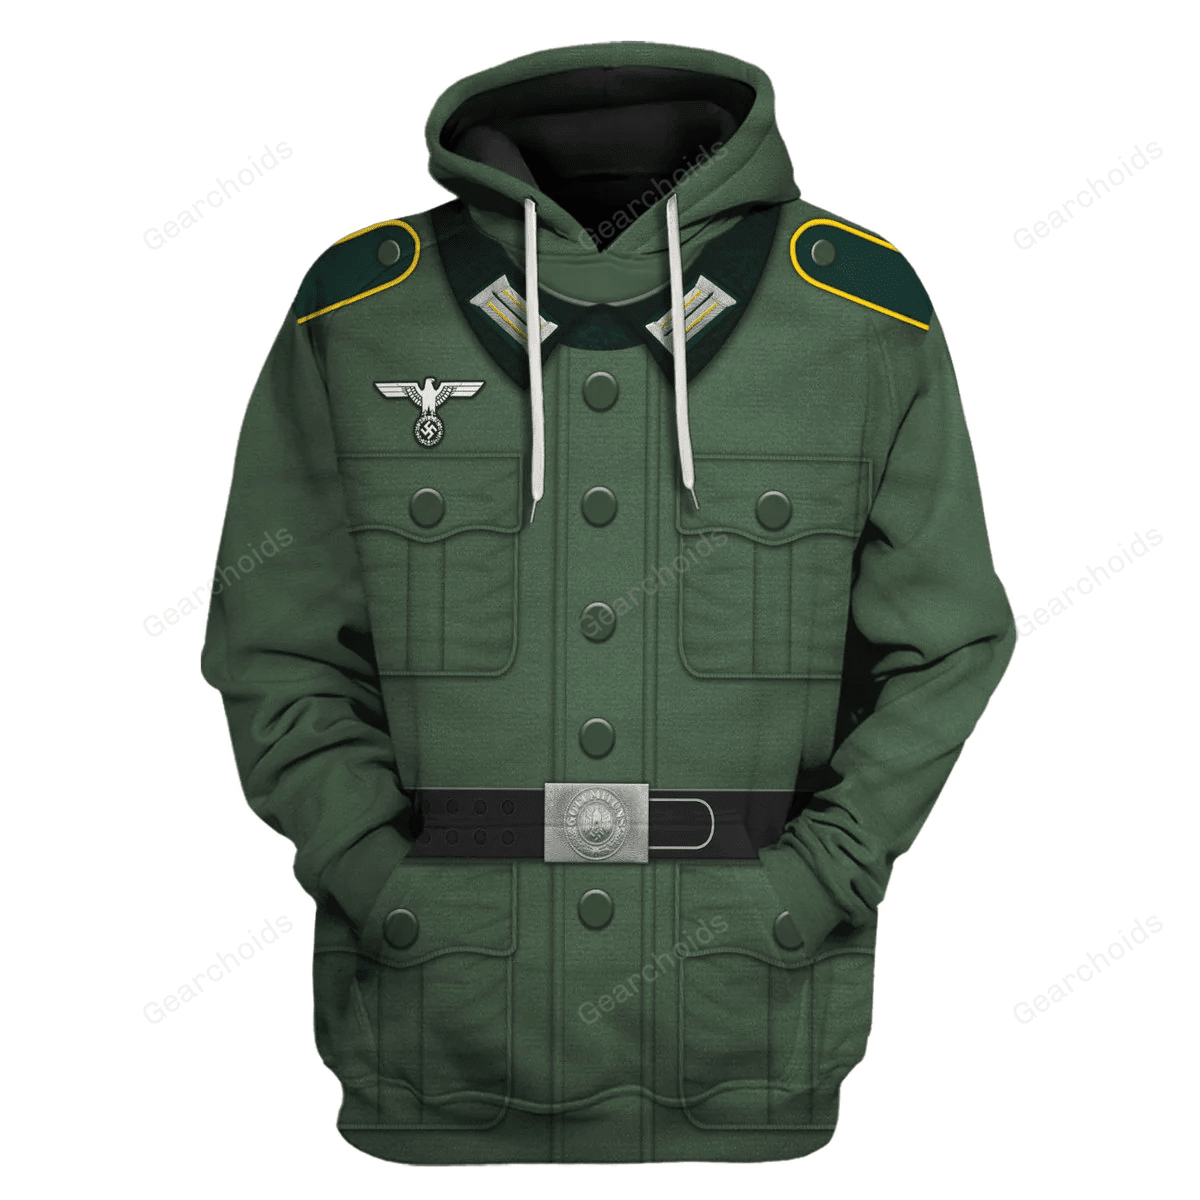 Gearchoids Basic German Army Uniform- Pattern- Private Soldier Costume Hoodie Sweatshirt T-Shirt Tracksuit